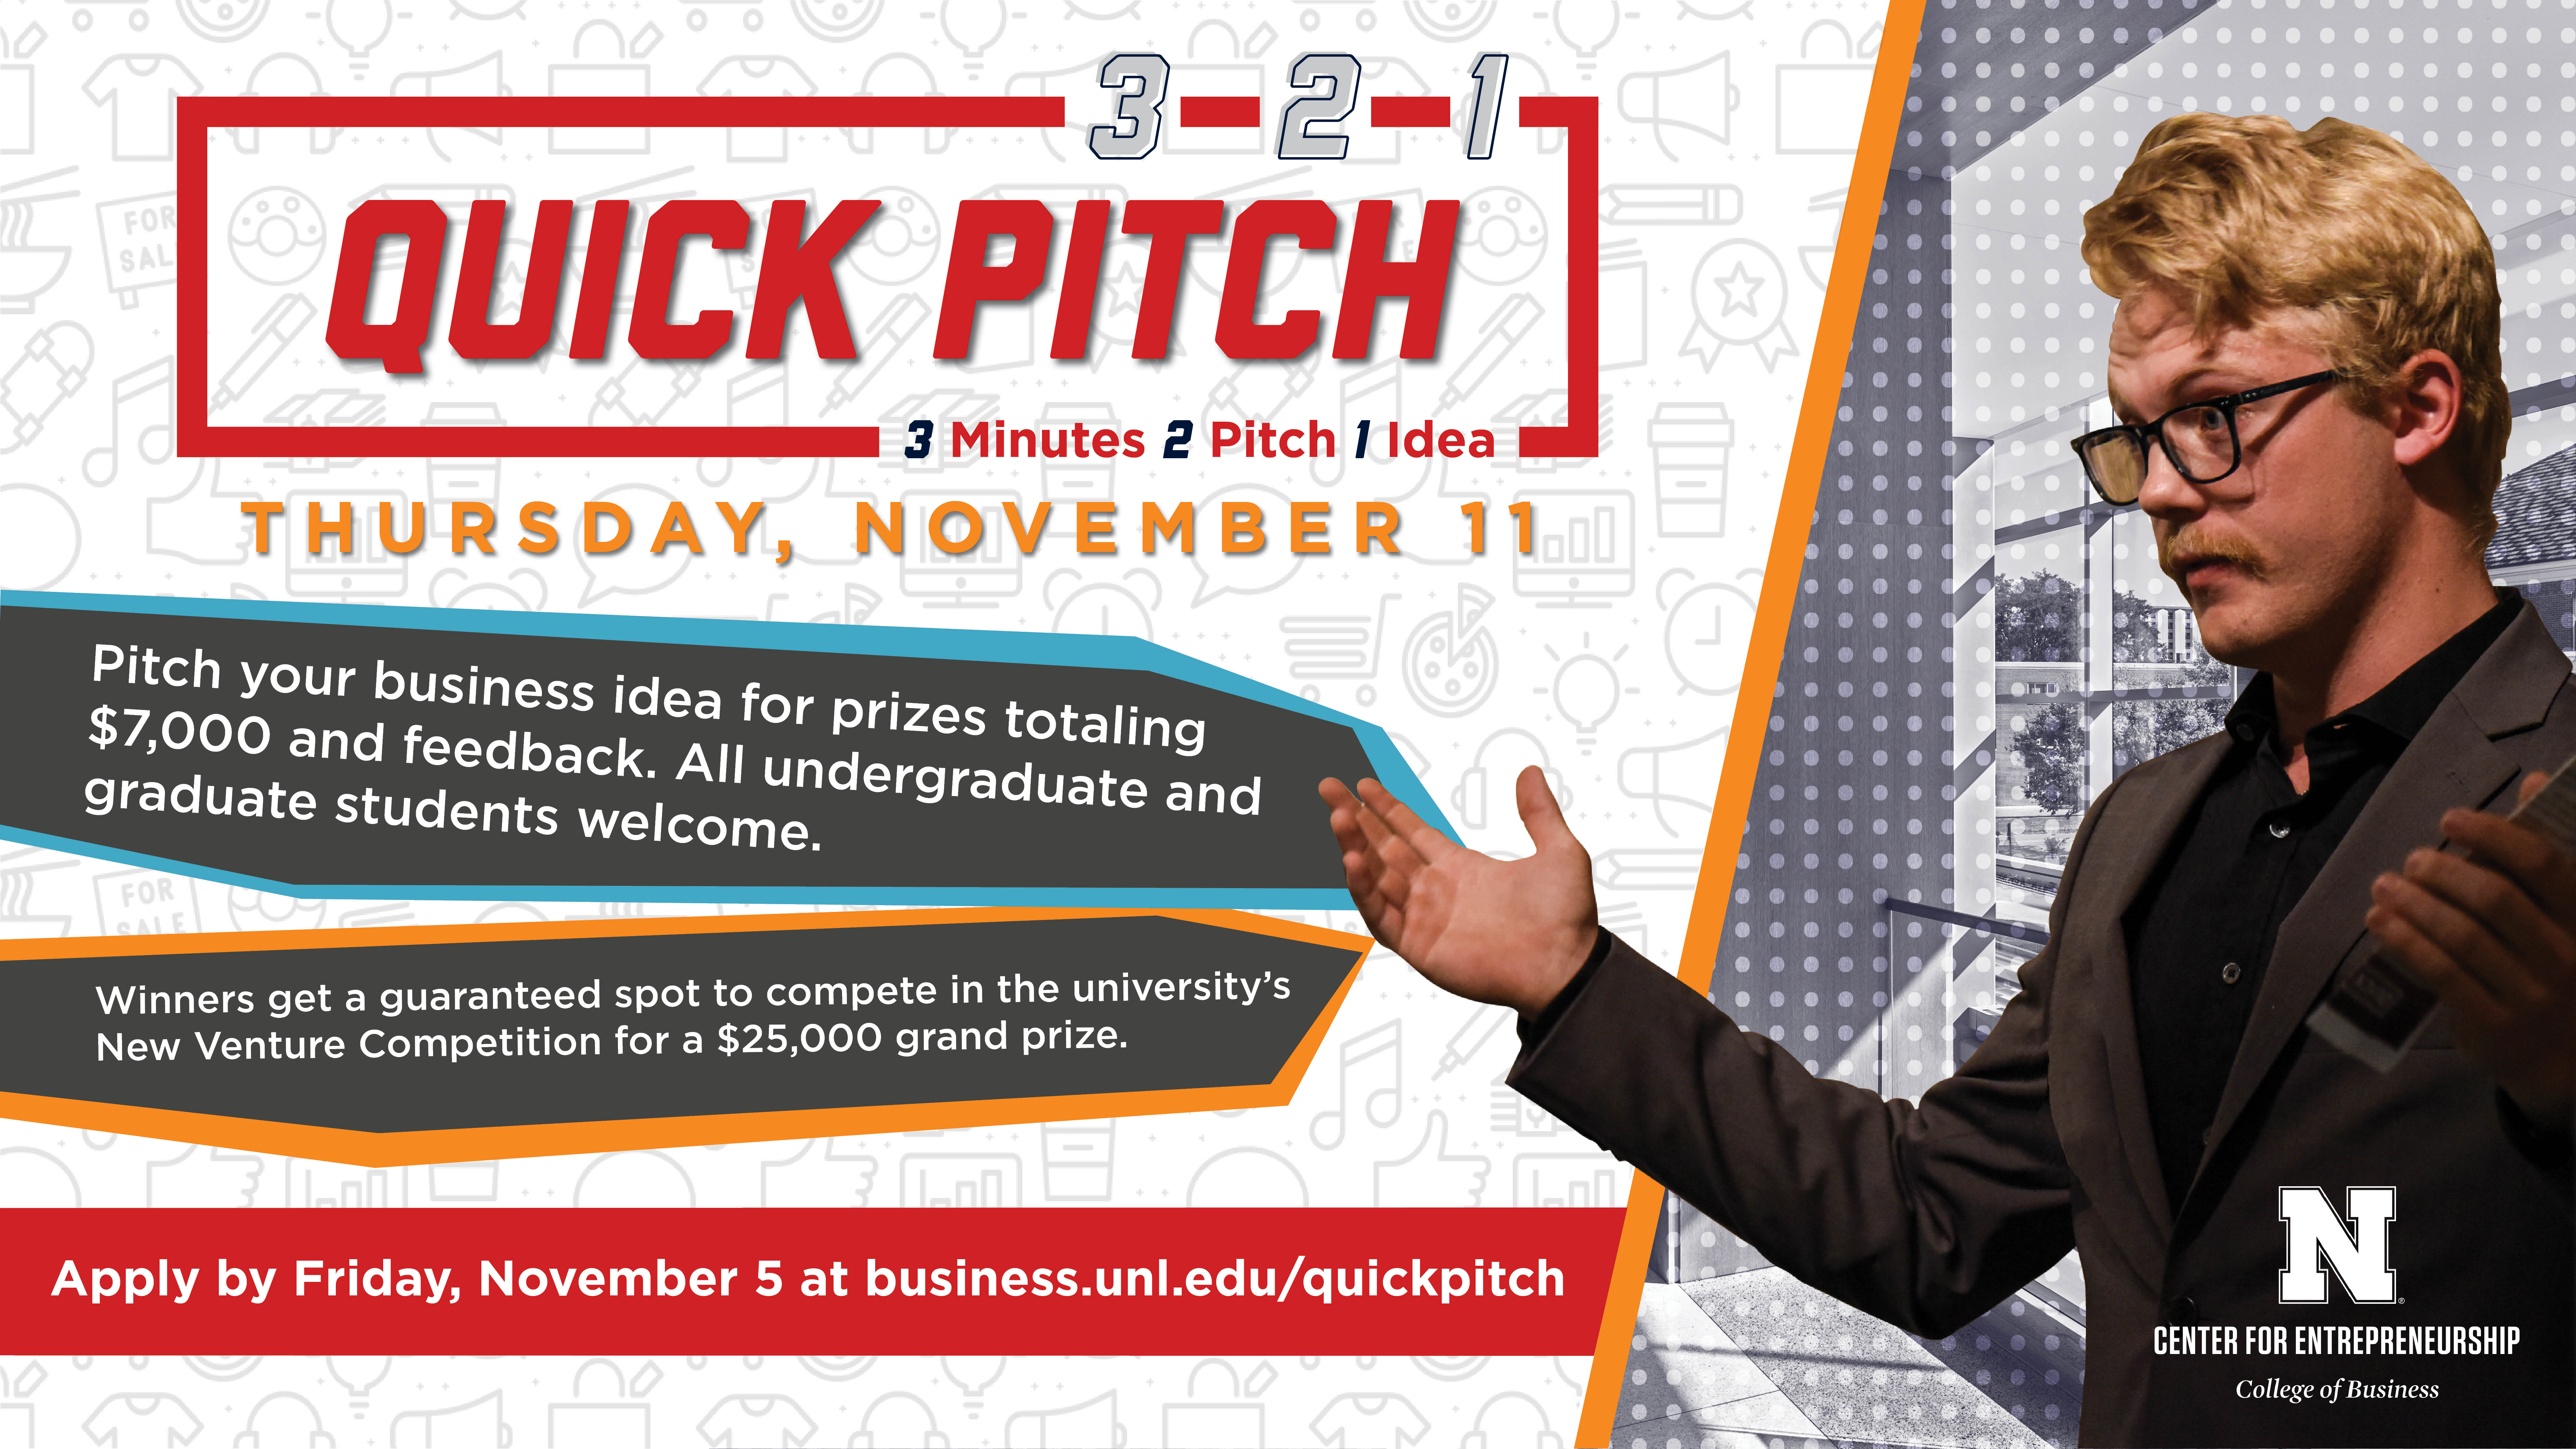 3 2 1 Quick Pitch set for Thursday November 11. Apply by Friday November 5 at business.unl.edu/quickpitch